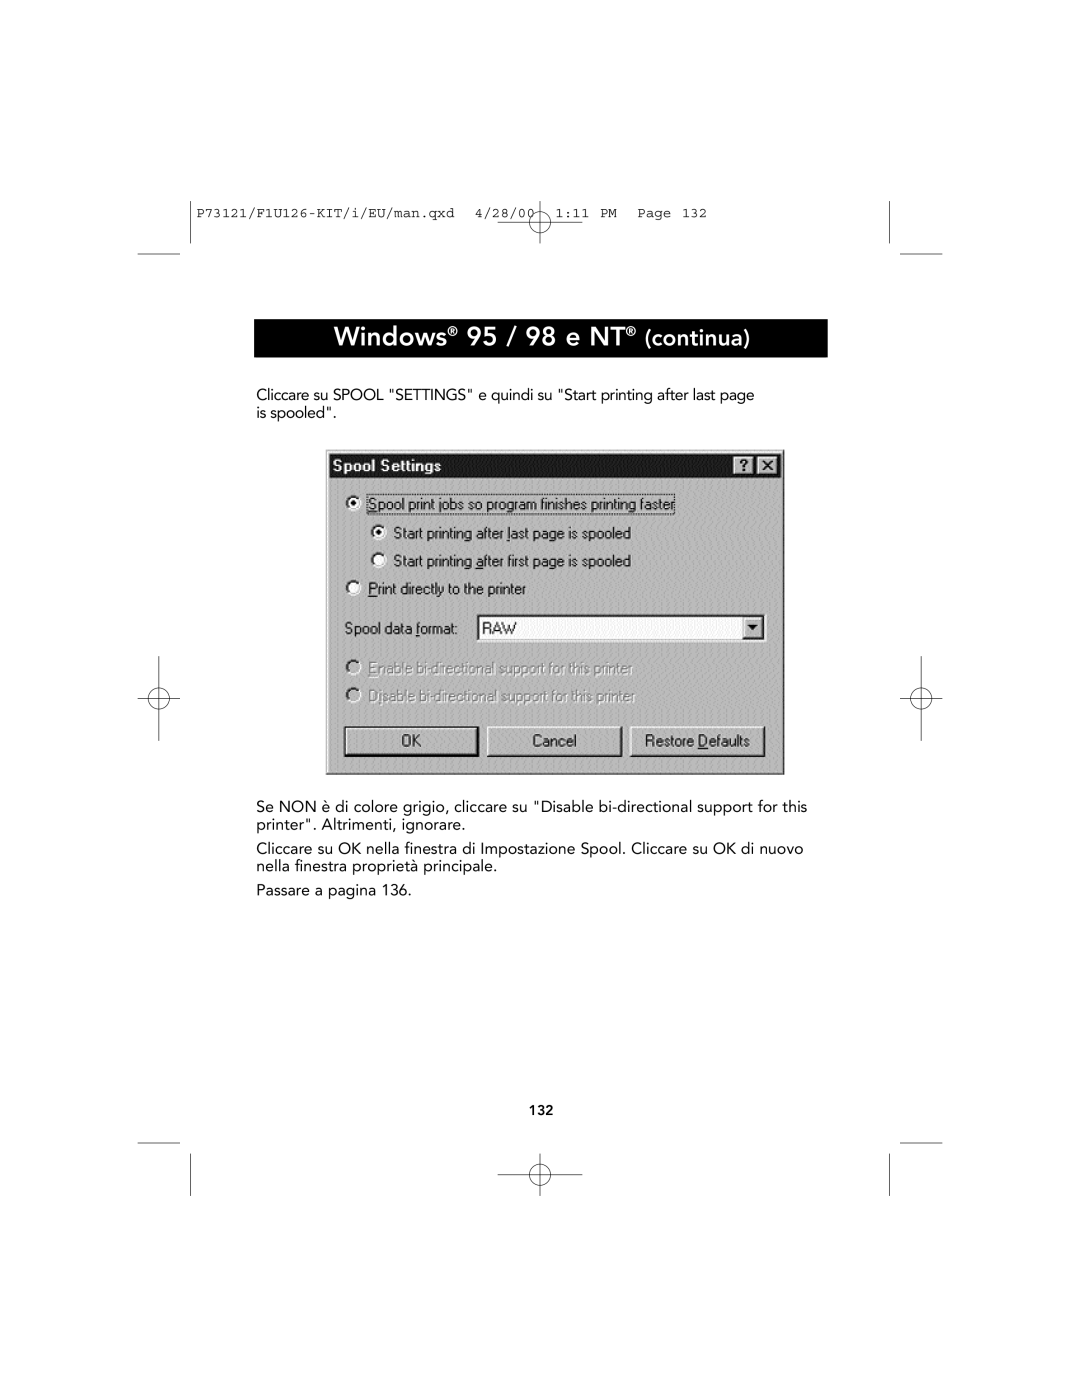 Belkin P73121, F1U126-KIT user manual Windows 95 / 98 e NT continua, Passare a pagina 